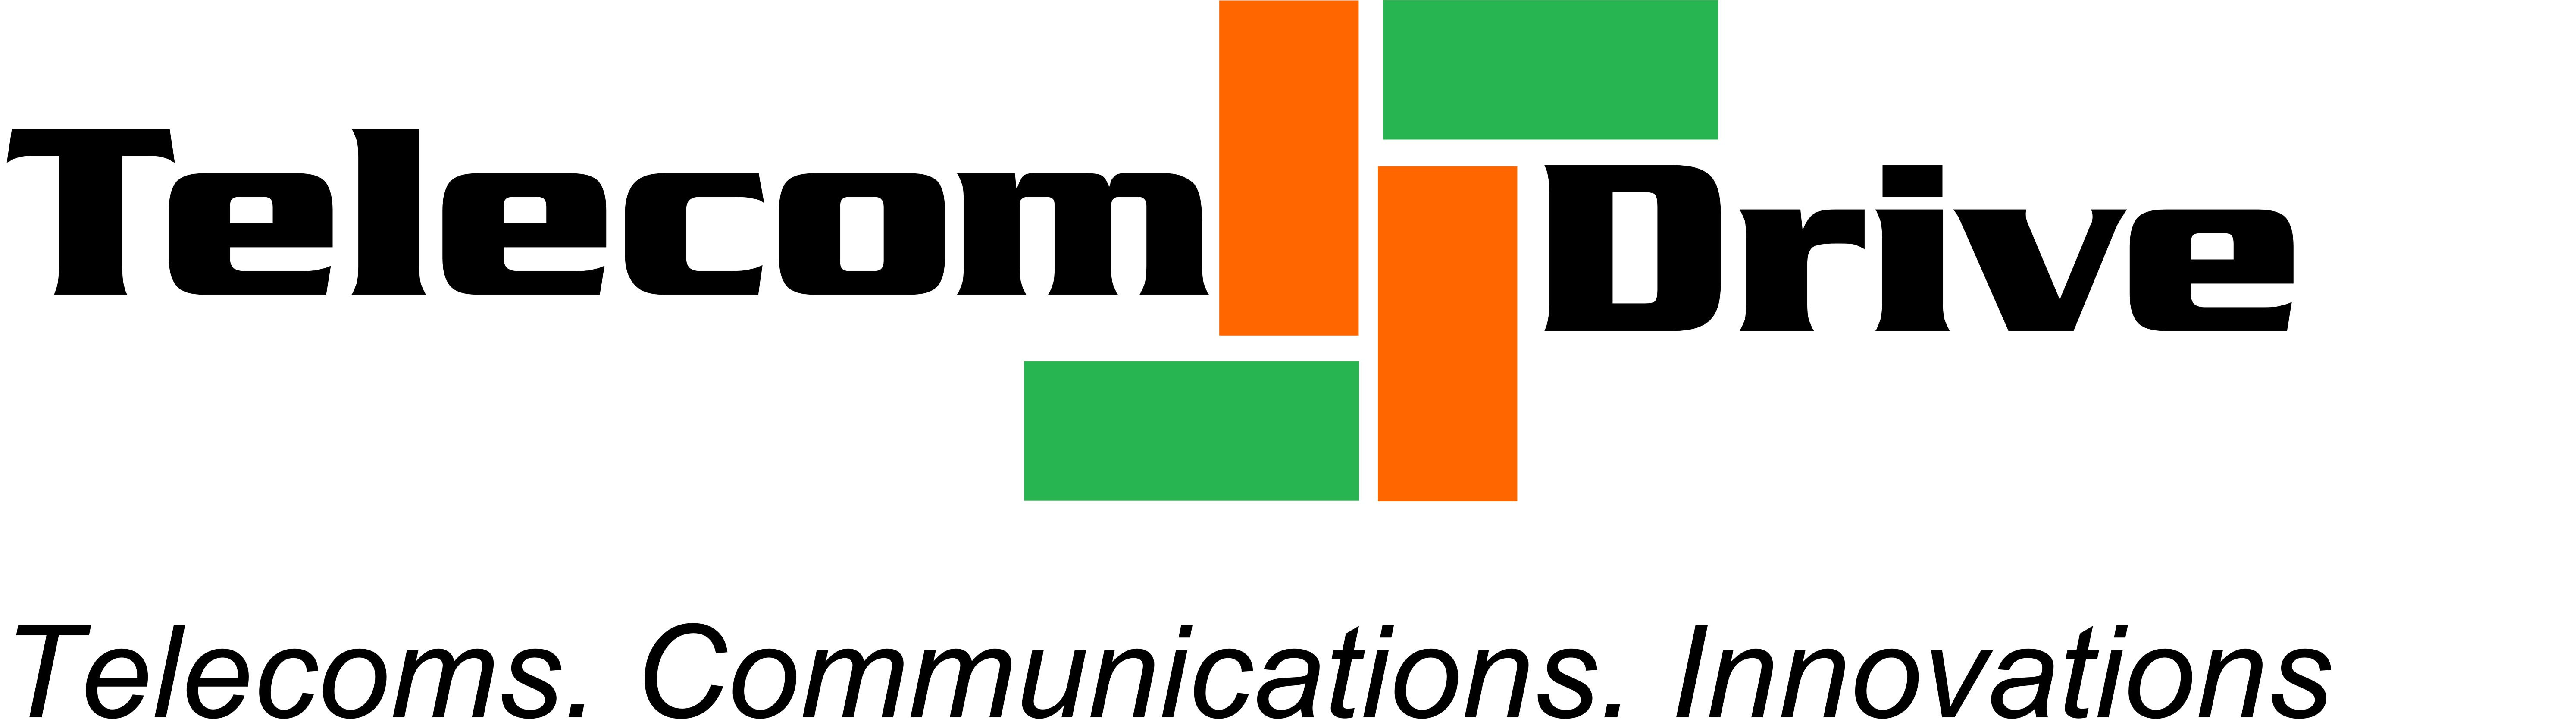 Telecom Drive Logo